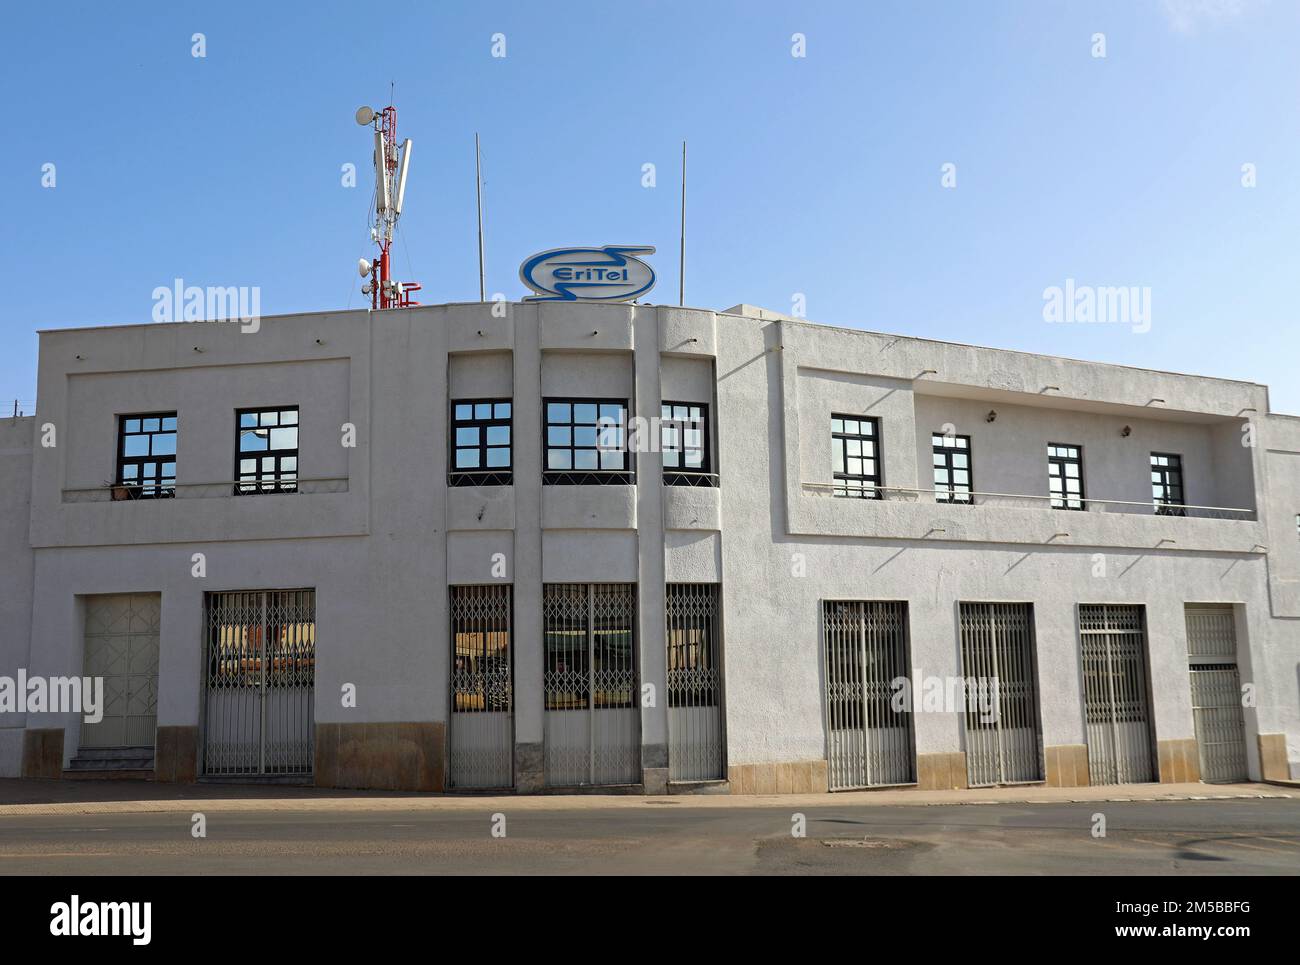 Eritel Telecom Corporation headquarters in Asmara Stock Photo